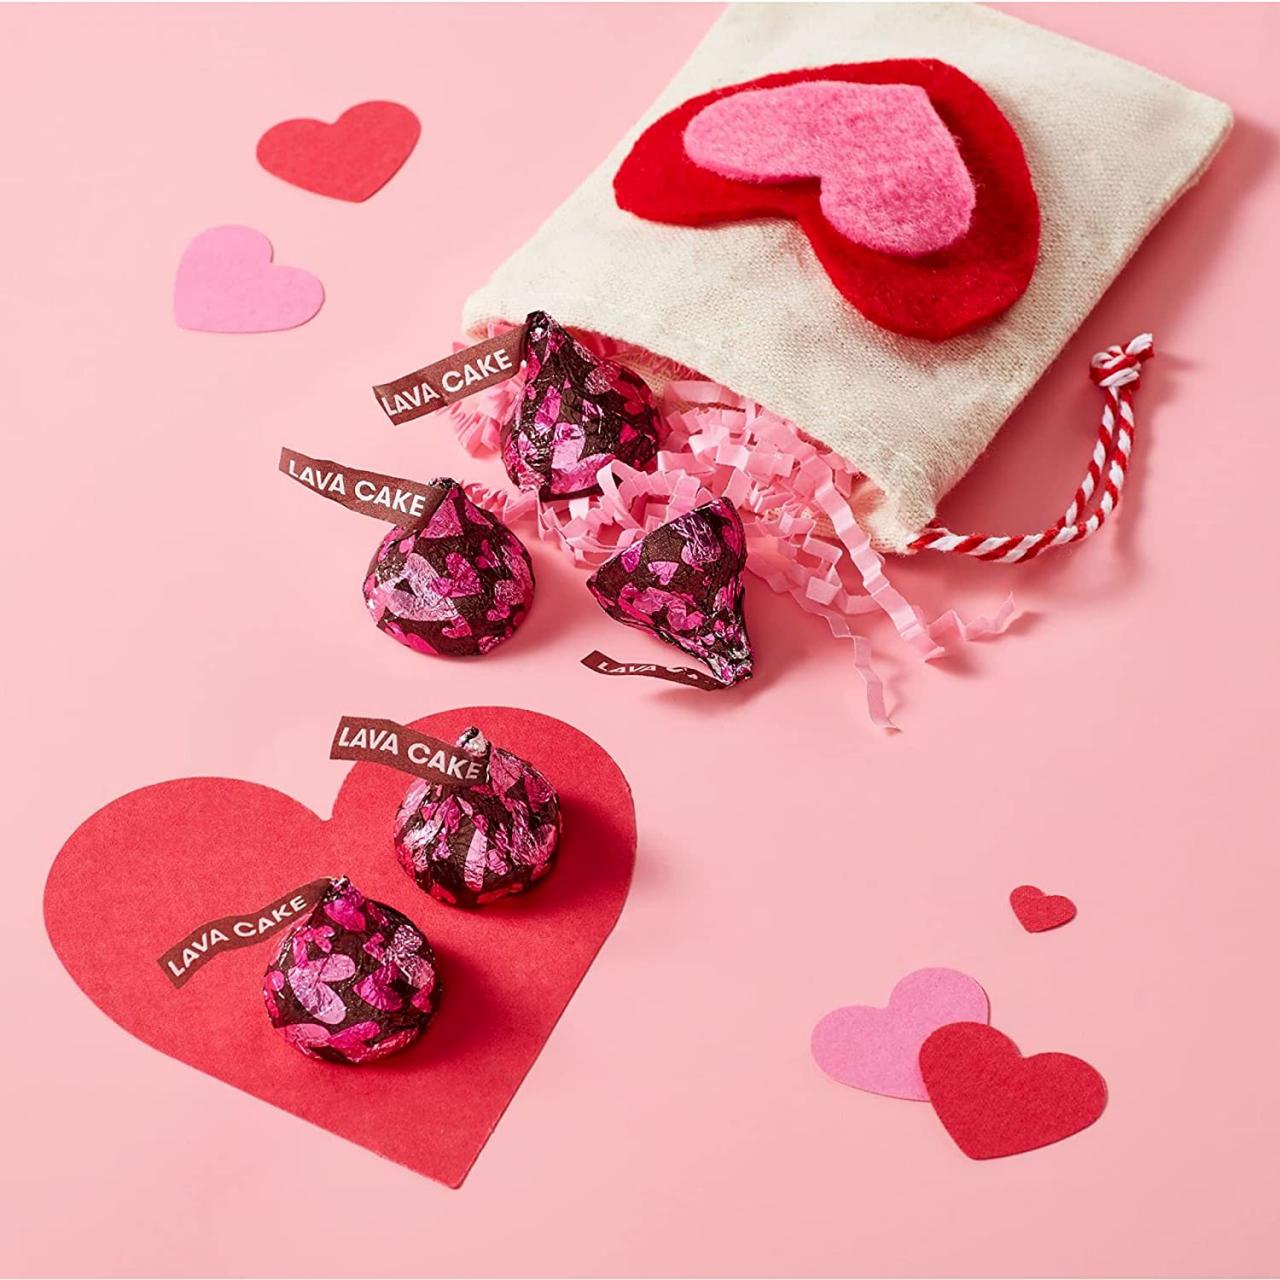 M&M'S Milk Chocolate Valentines Day Cupid's Mix Valentine Candy